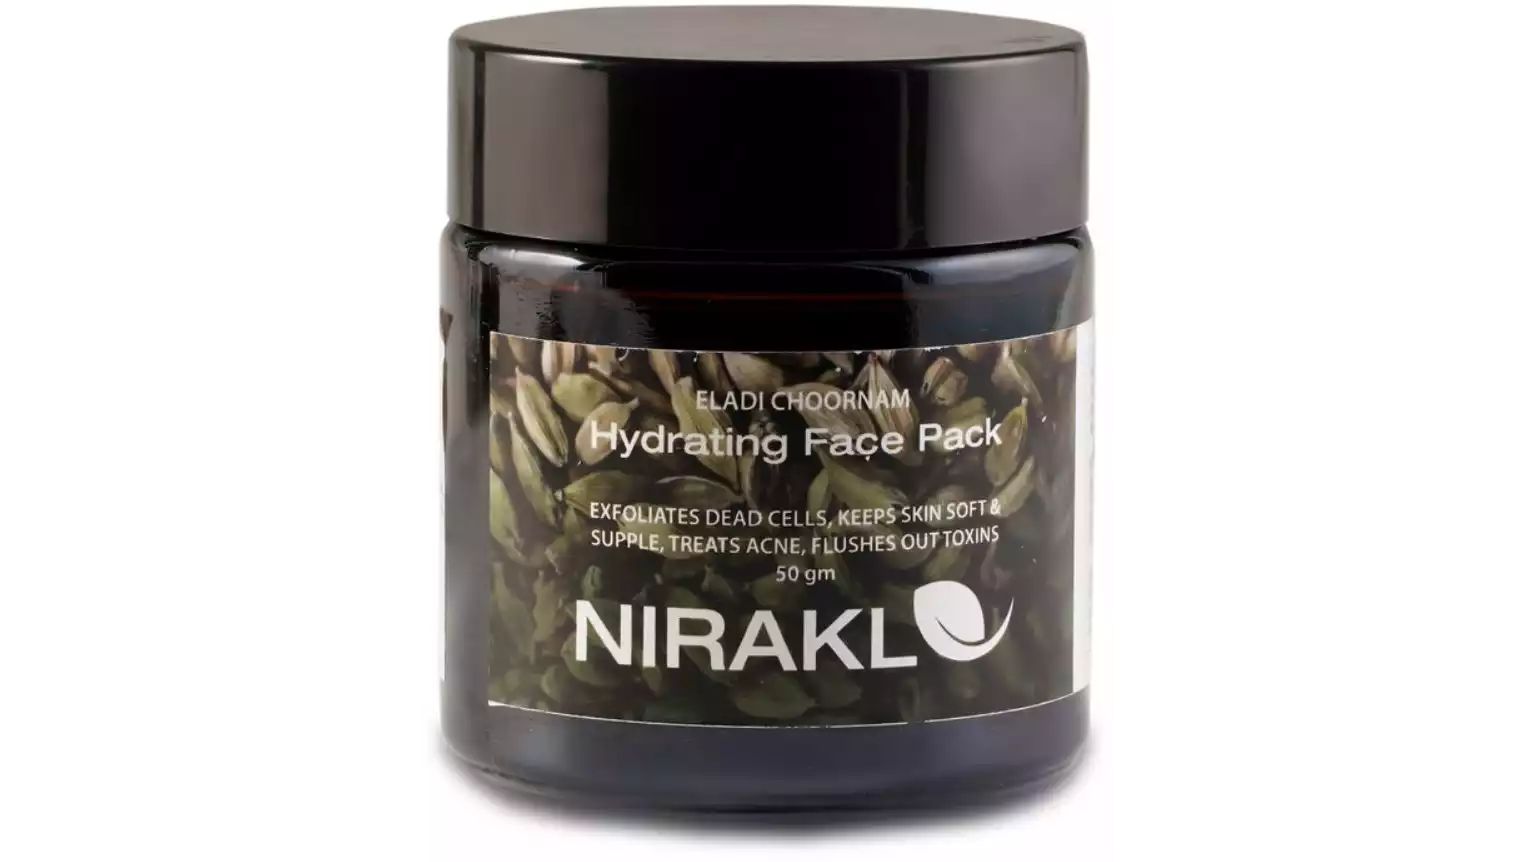 Nirakle Hydrating Face Pack Eladi Choornam (50g)